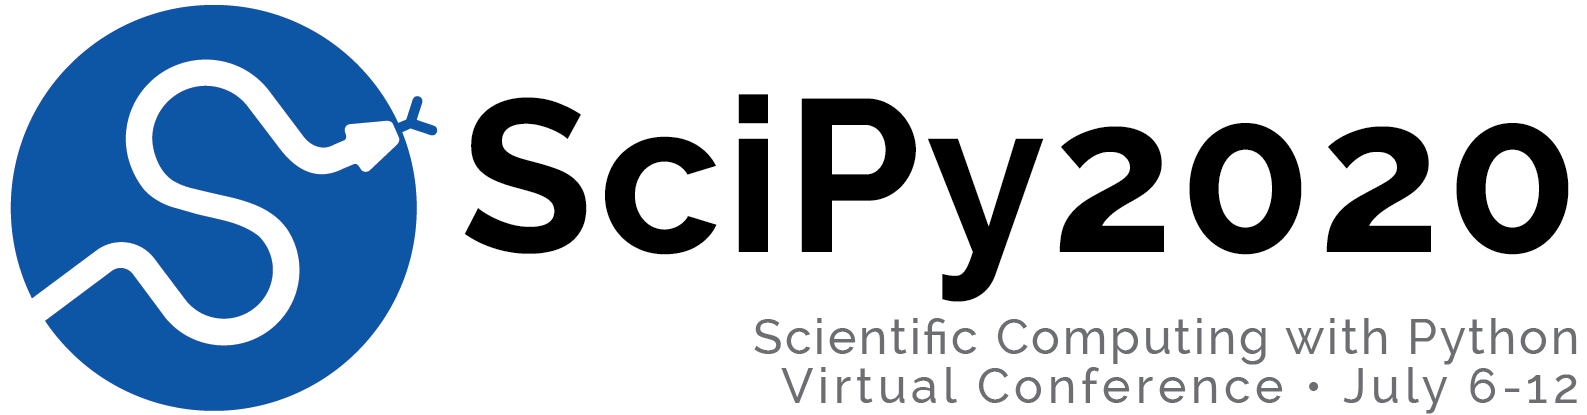 SciPy 2020 Conference Logo